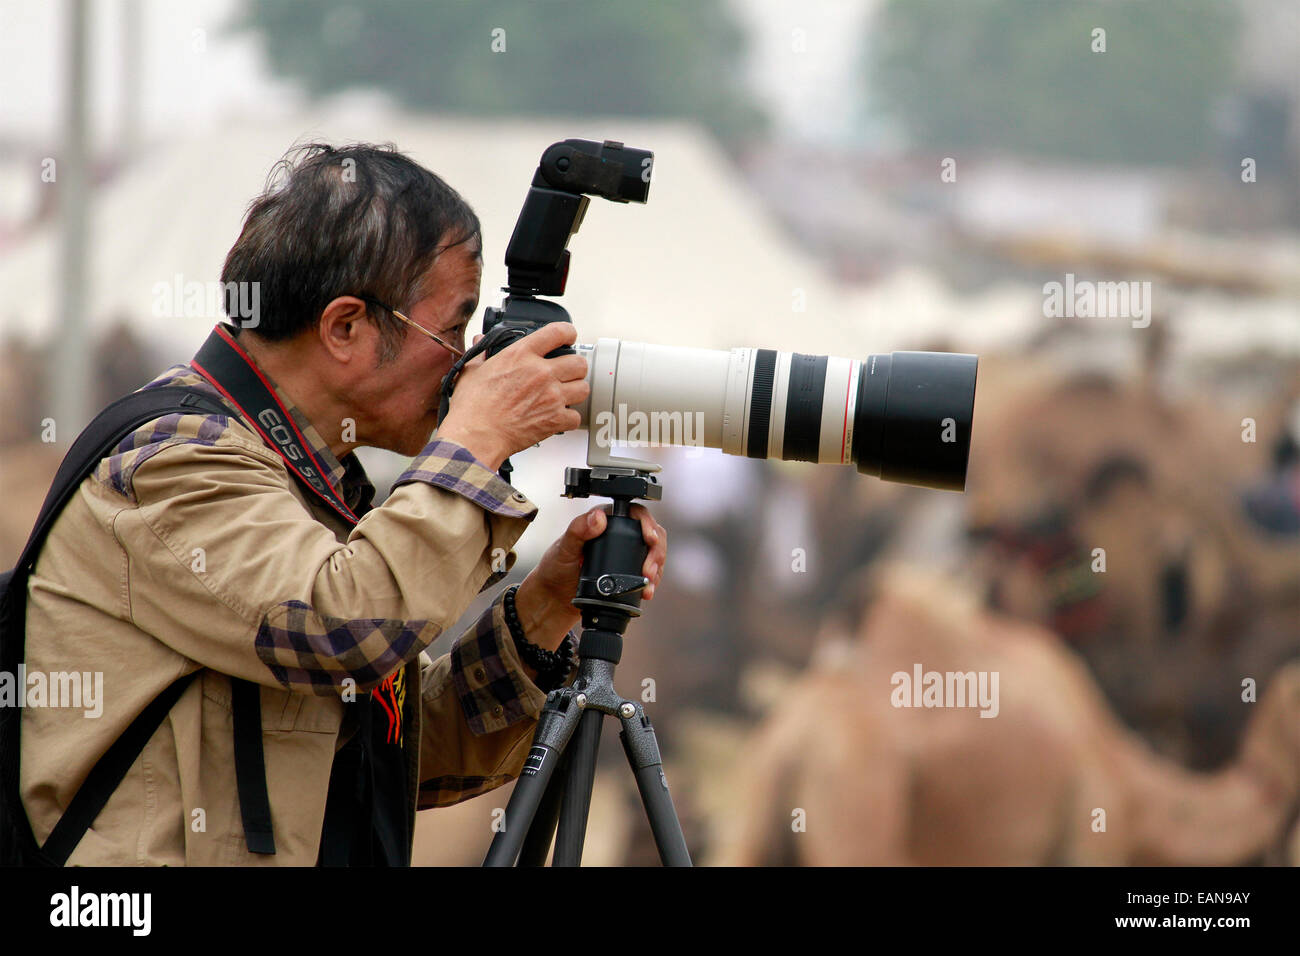 Camera shooting fotografías e imágenes de alta resolución - Alamy